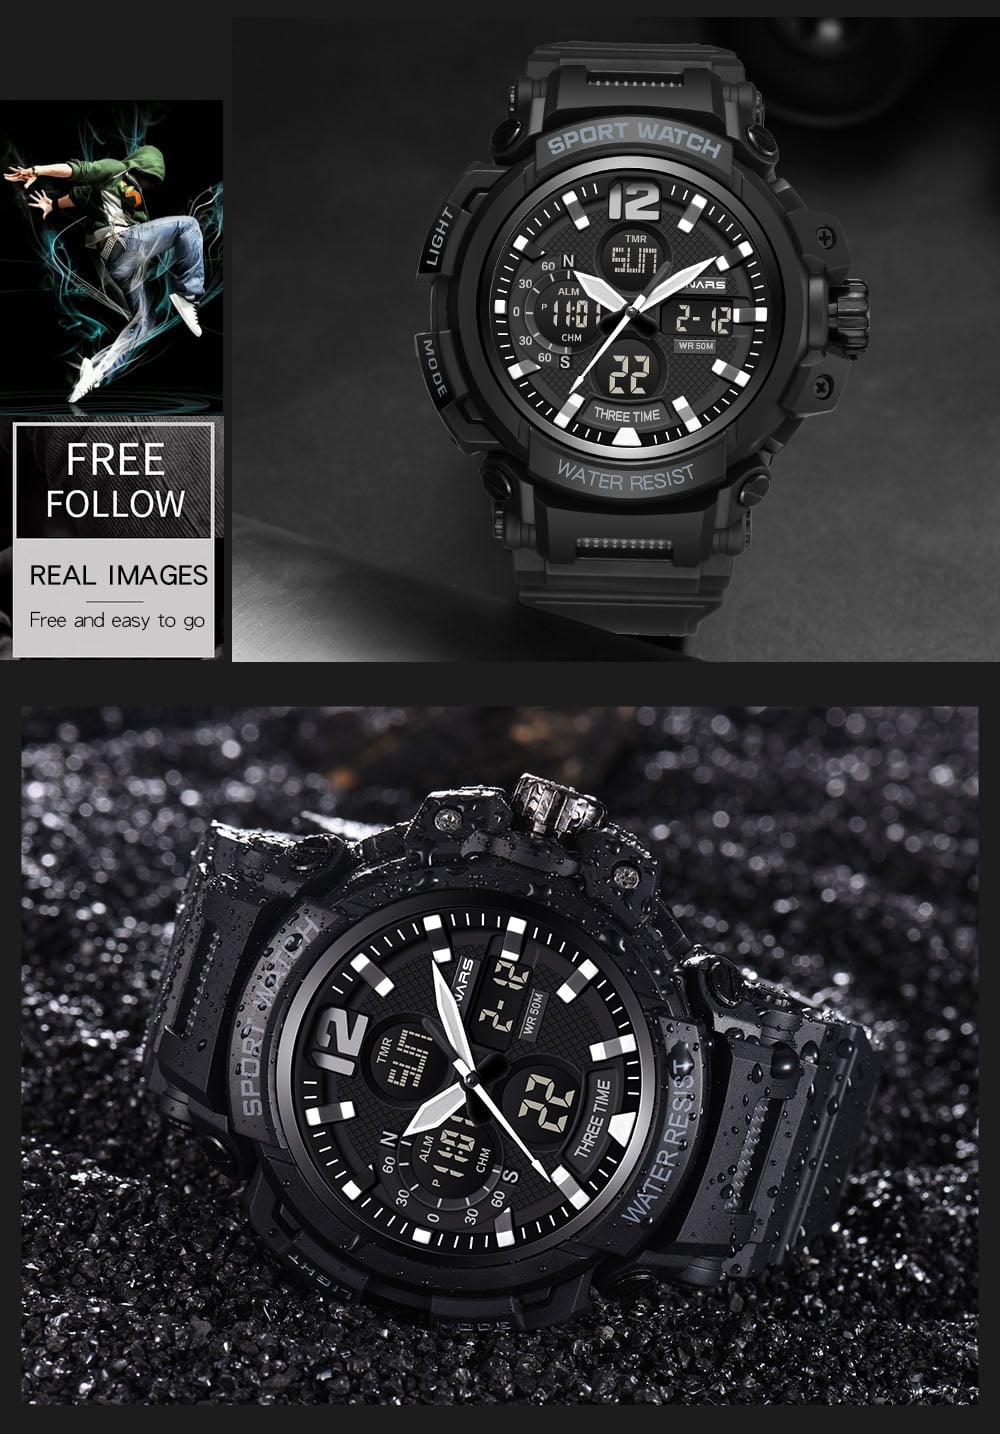 PANARS 8205 Digital Quartz Waterproof Male Watch- Black